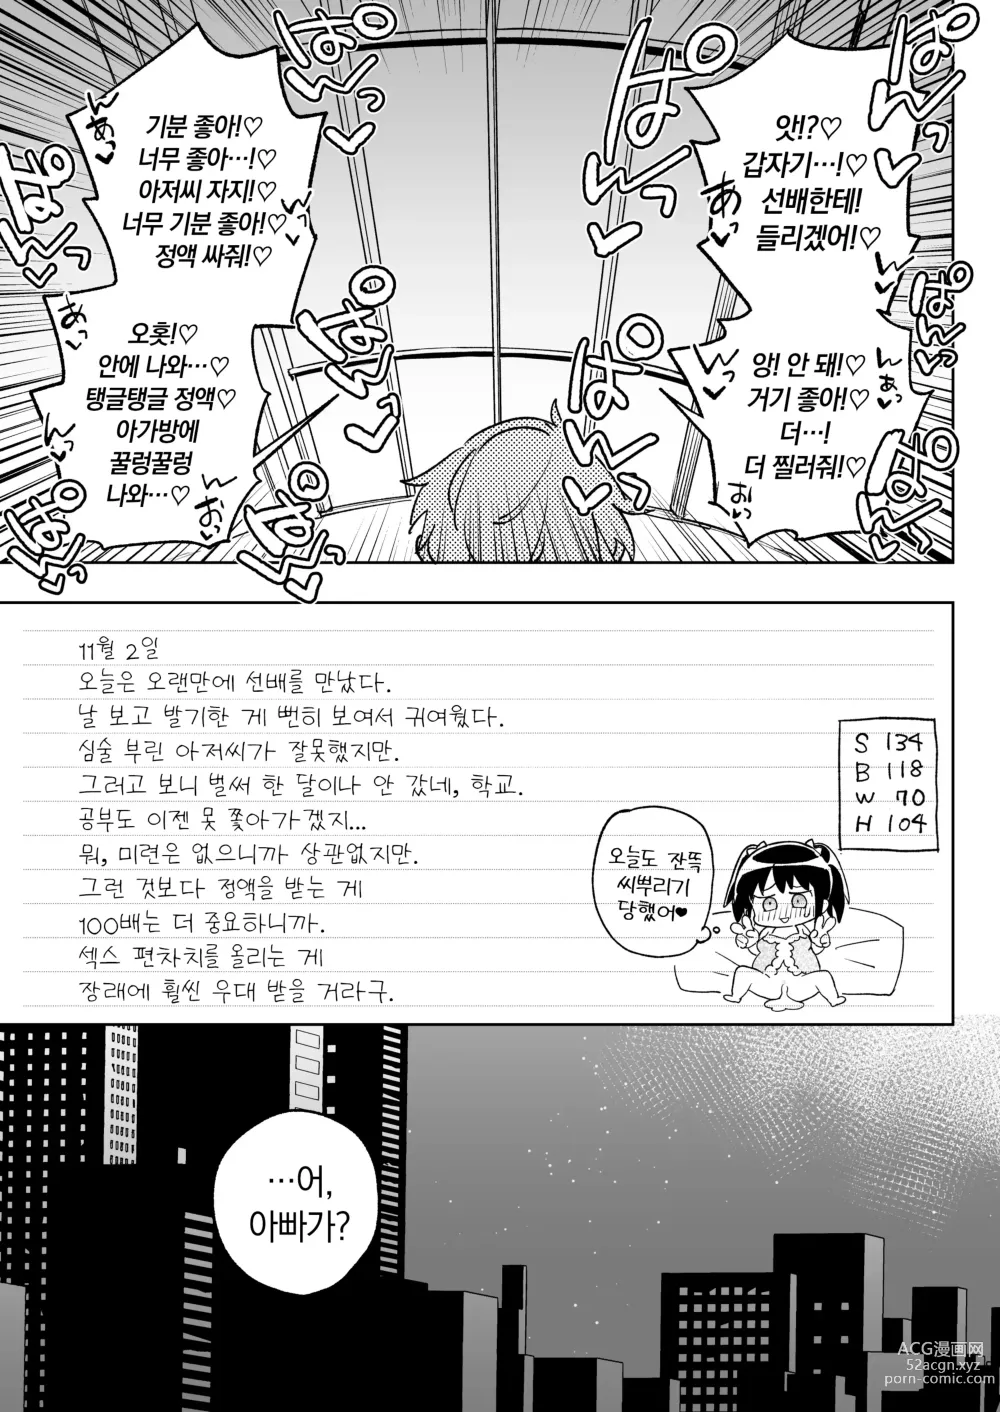 Page 30 of doujinshi 11월 28일 새 아빠의 소유물이 되었습니다.